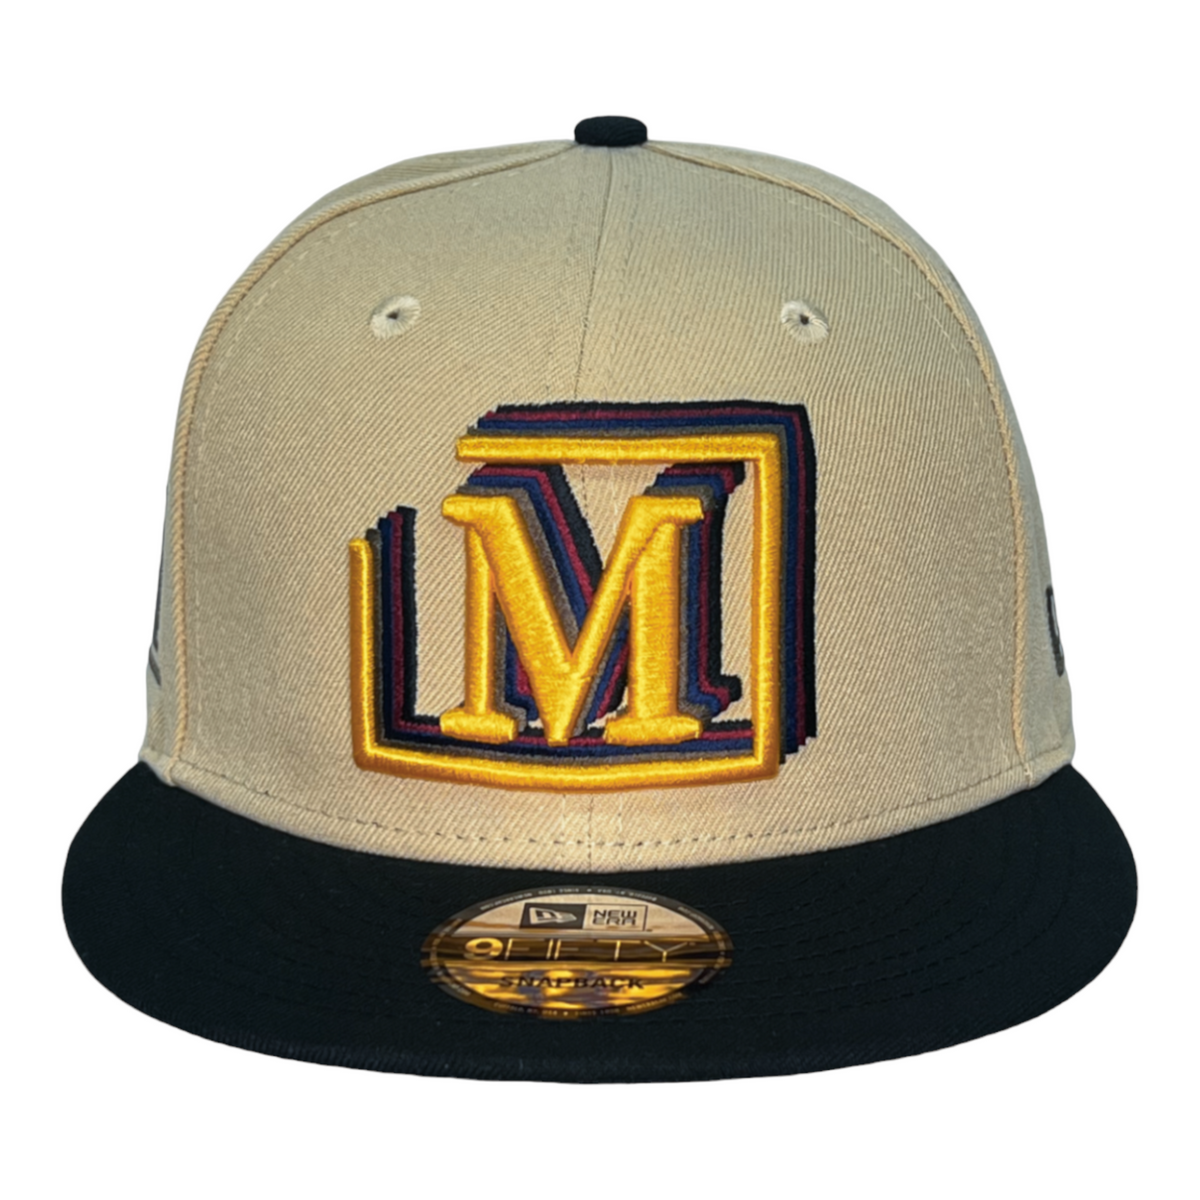 MDB Brand x New Era 9Fifty Snapback Multi M Logo Baseball Cap